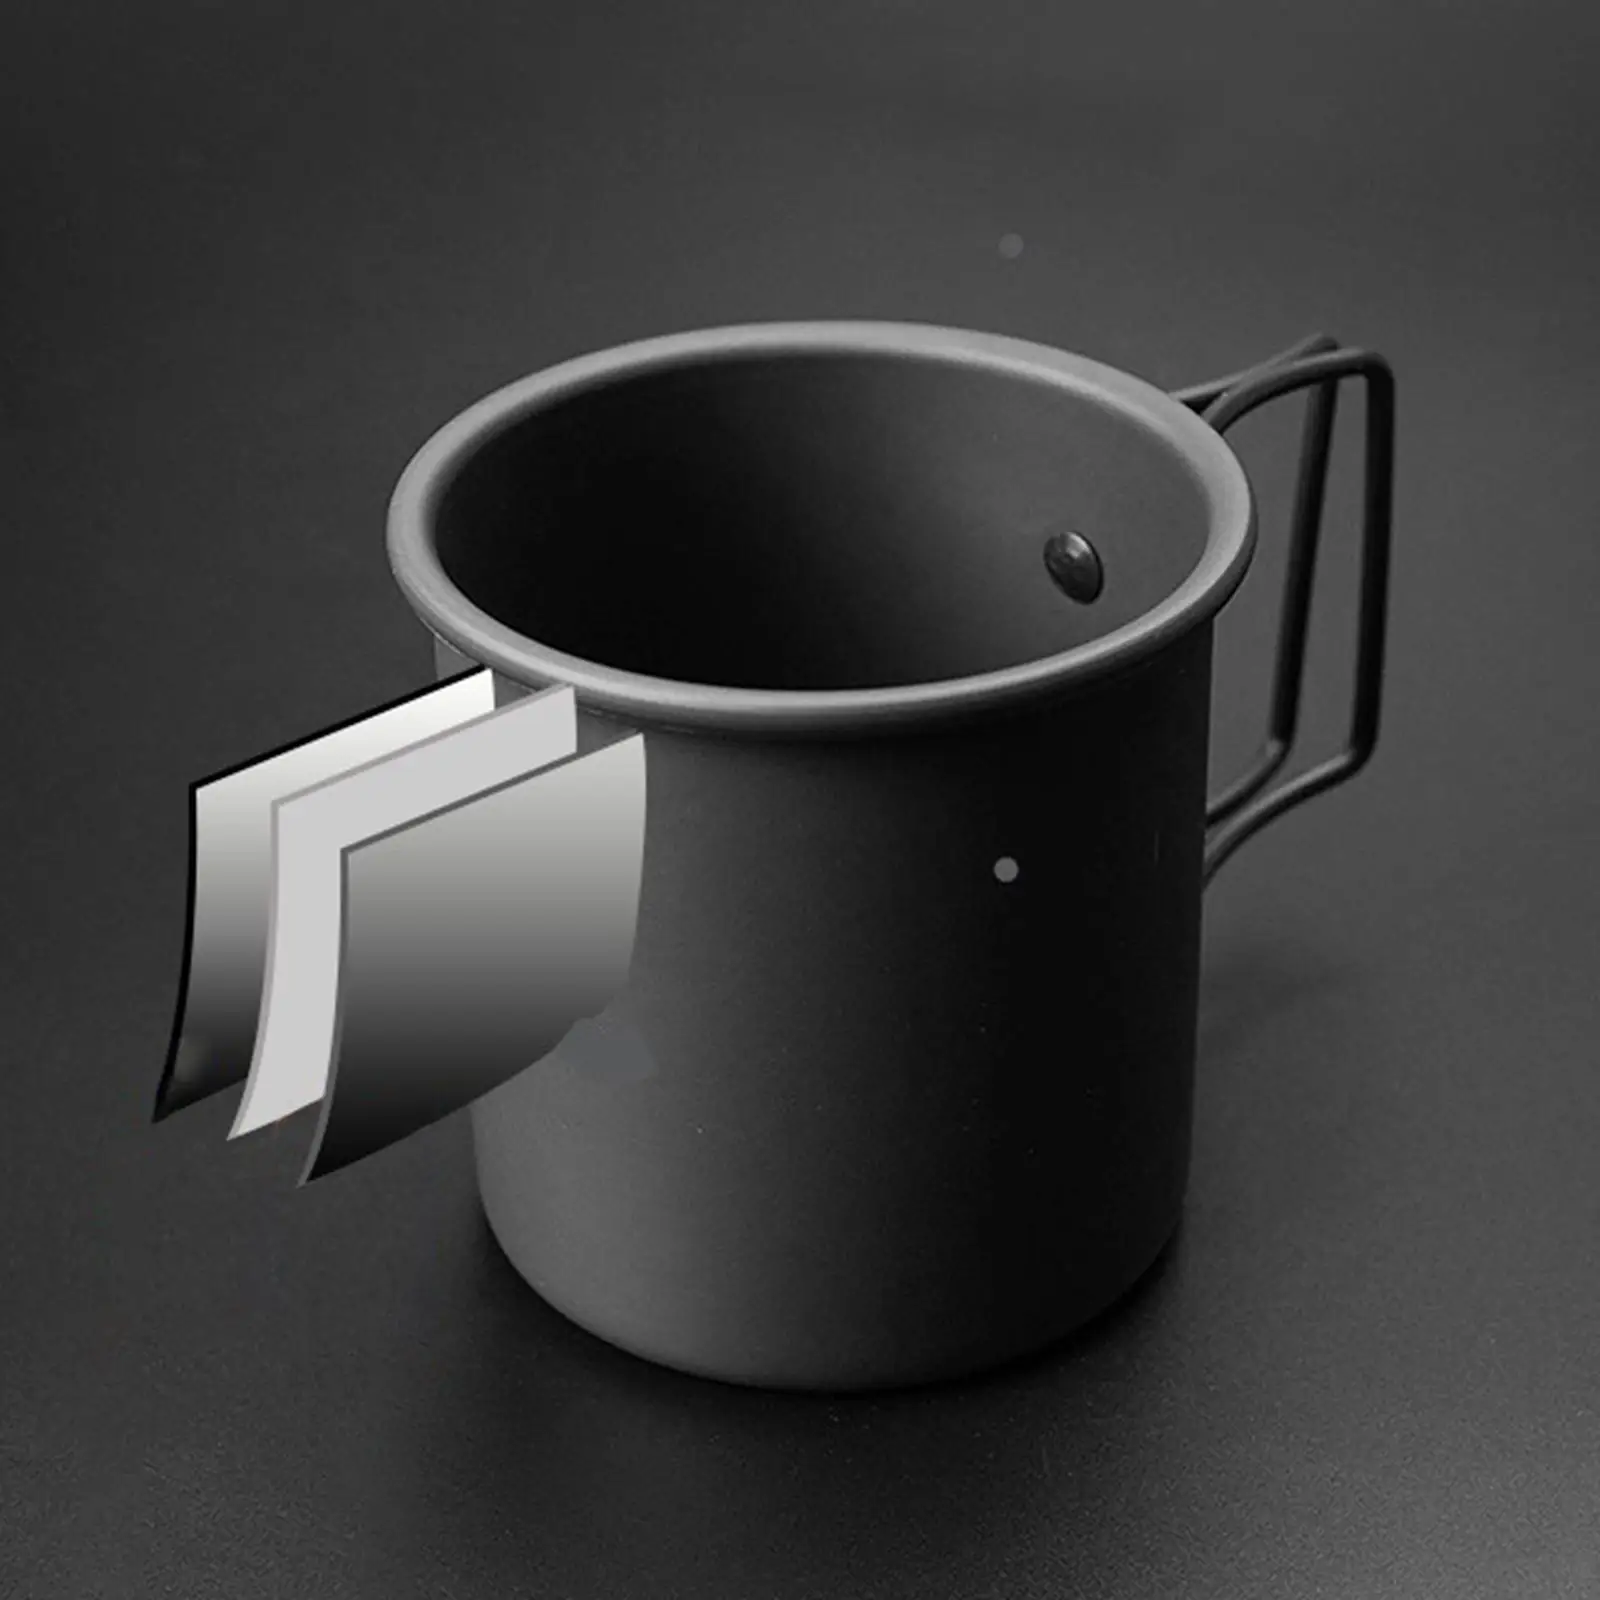 Coffee Mug Camping Mug with Folding Handle 300ml Durable Tableware Saving Space Ultralight Multifunctional Water Cup for Cooking